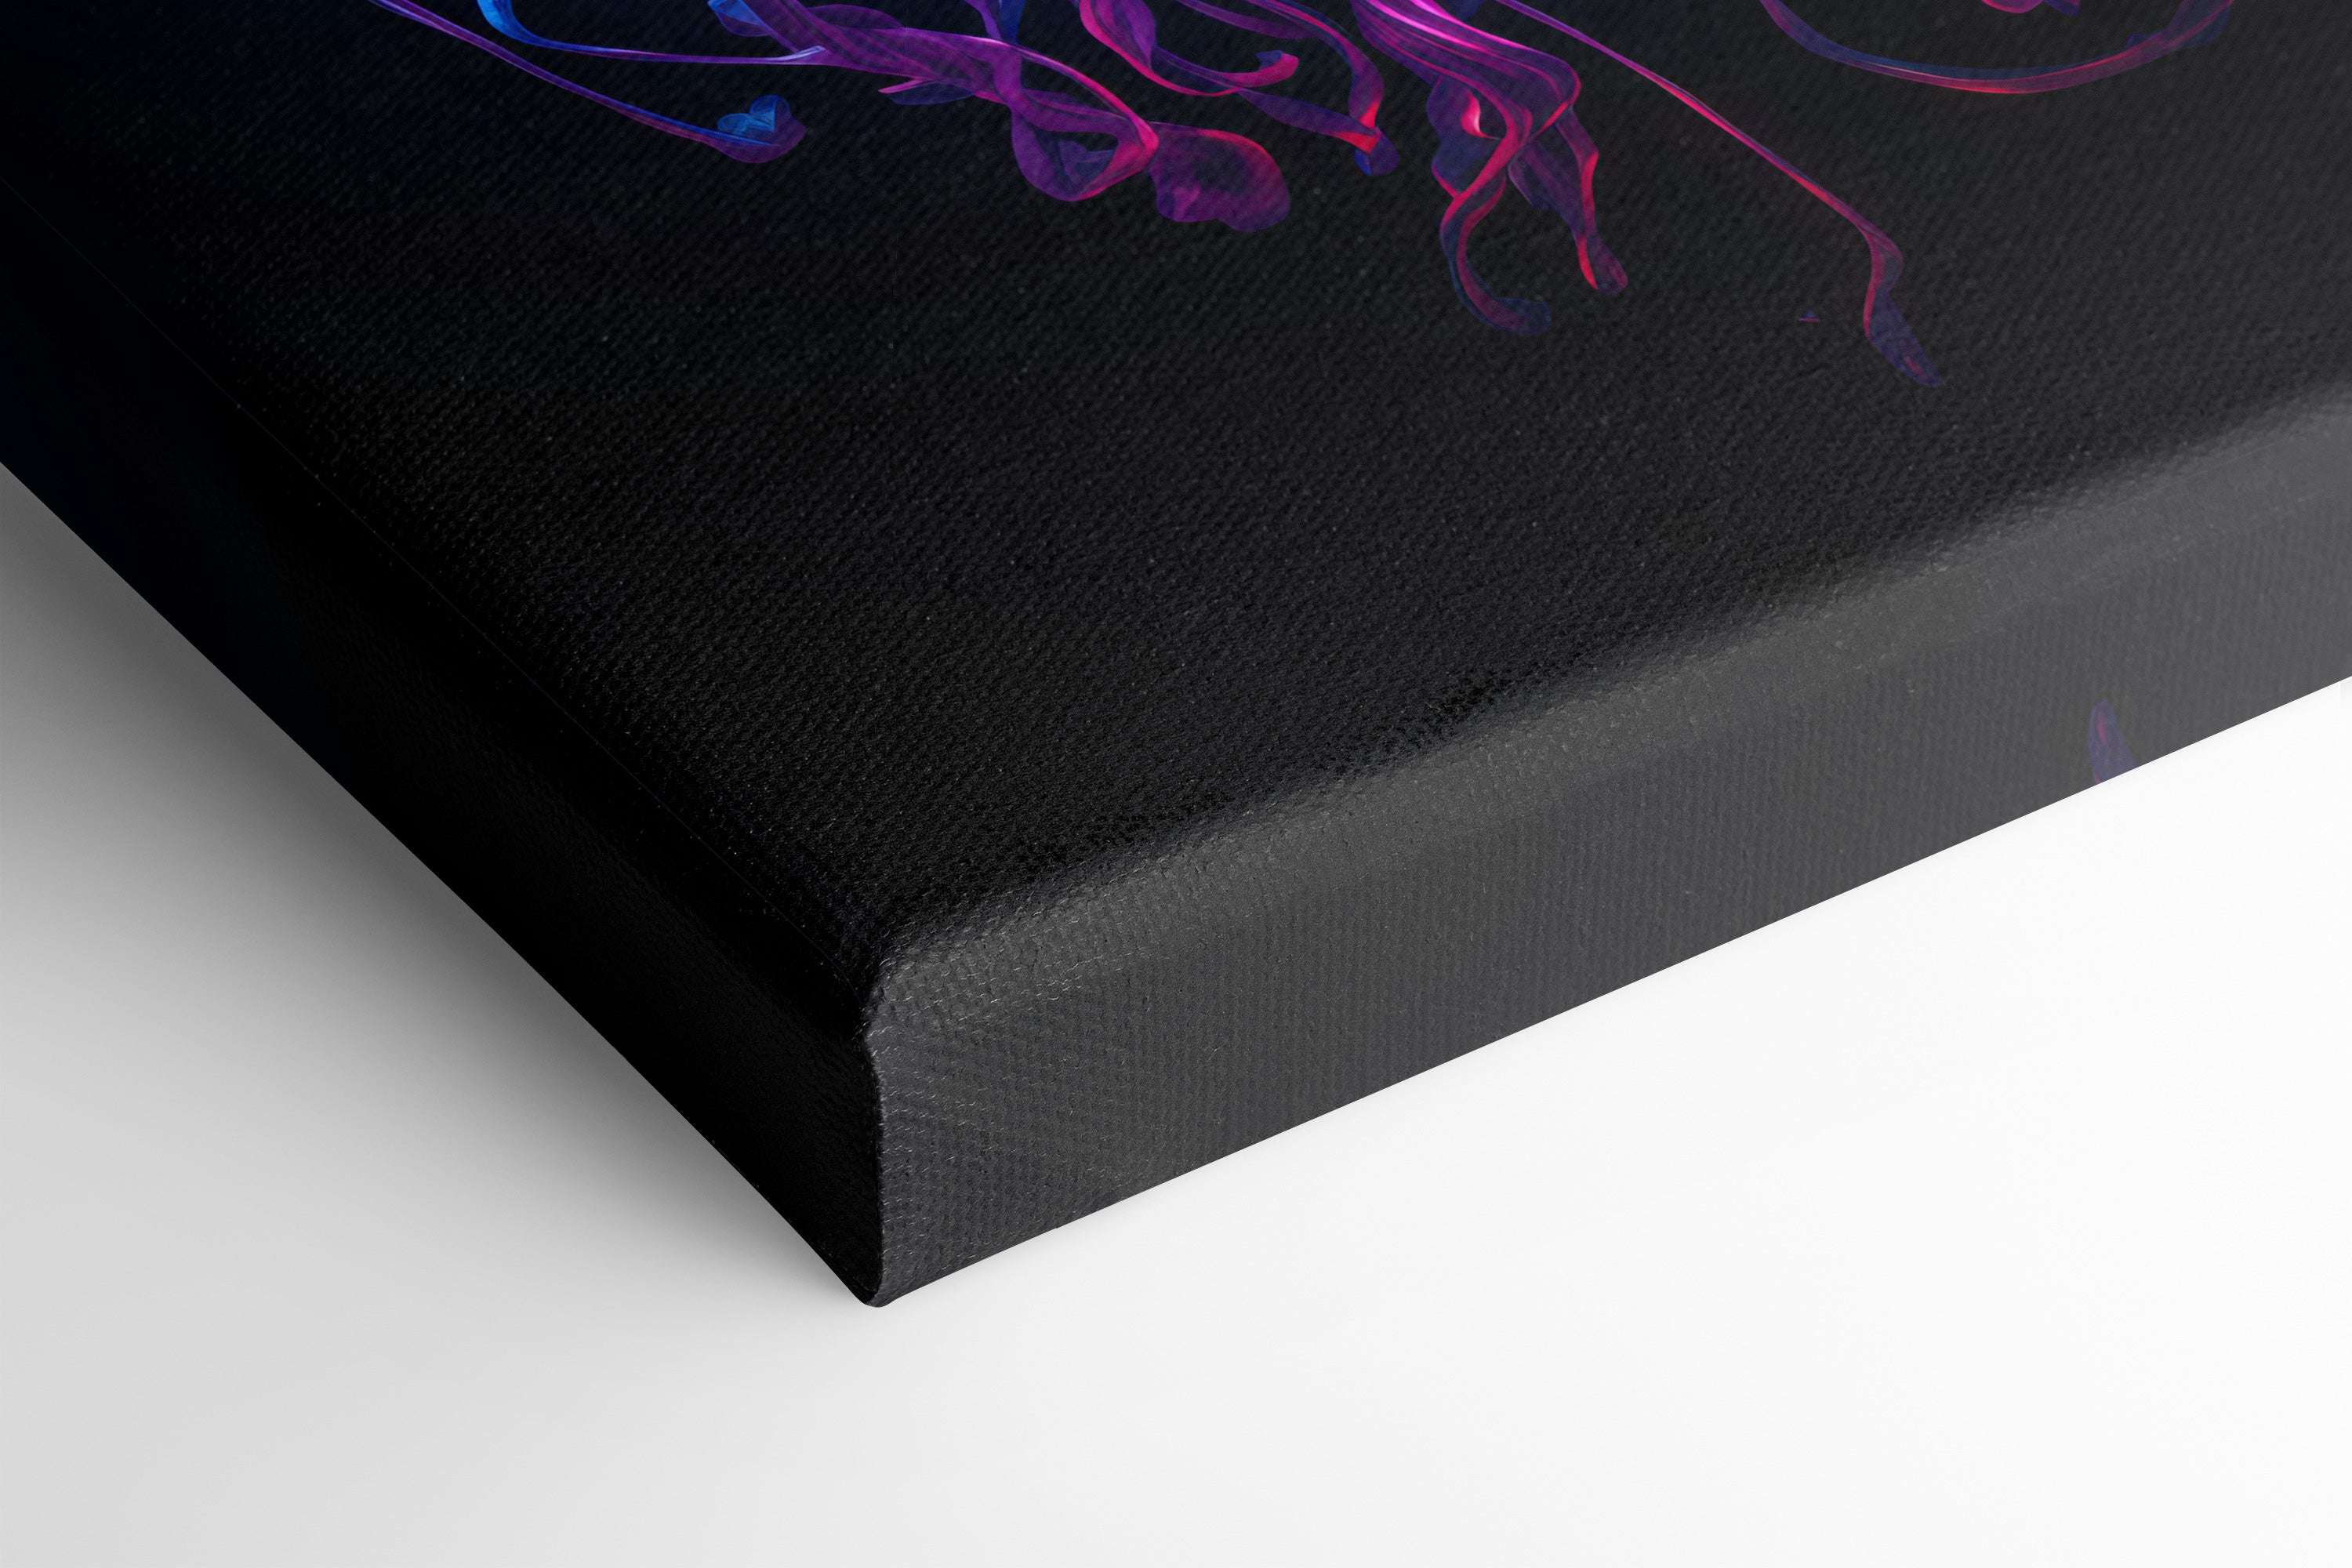 Luminous Dance of Cosmic Medusa - Canvas Print - Artoholica Ready to Hang Canvas Print